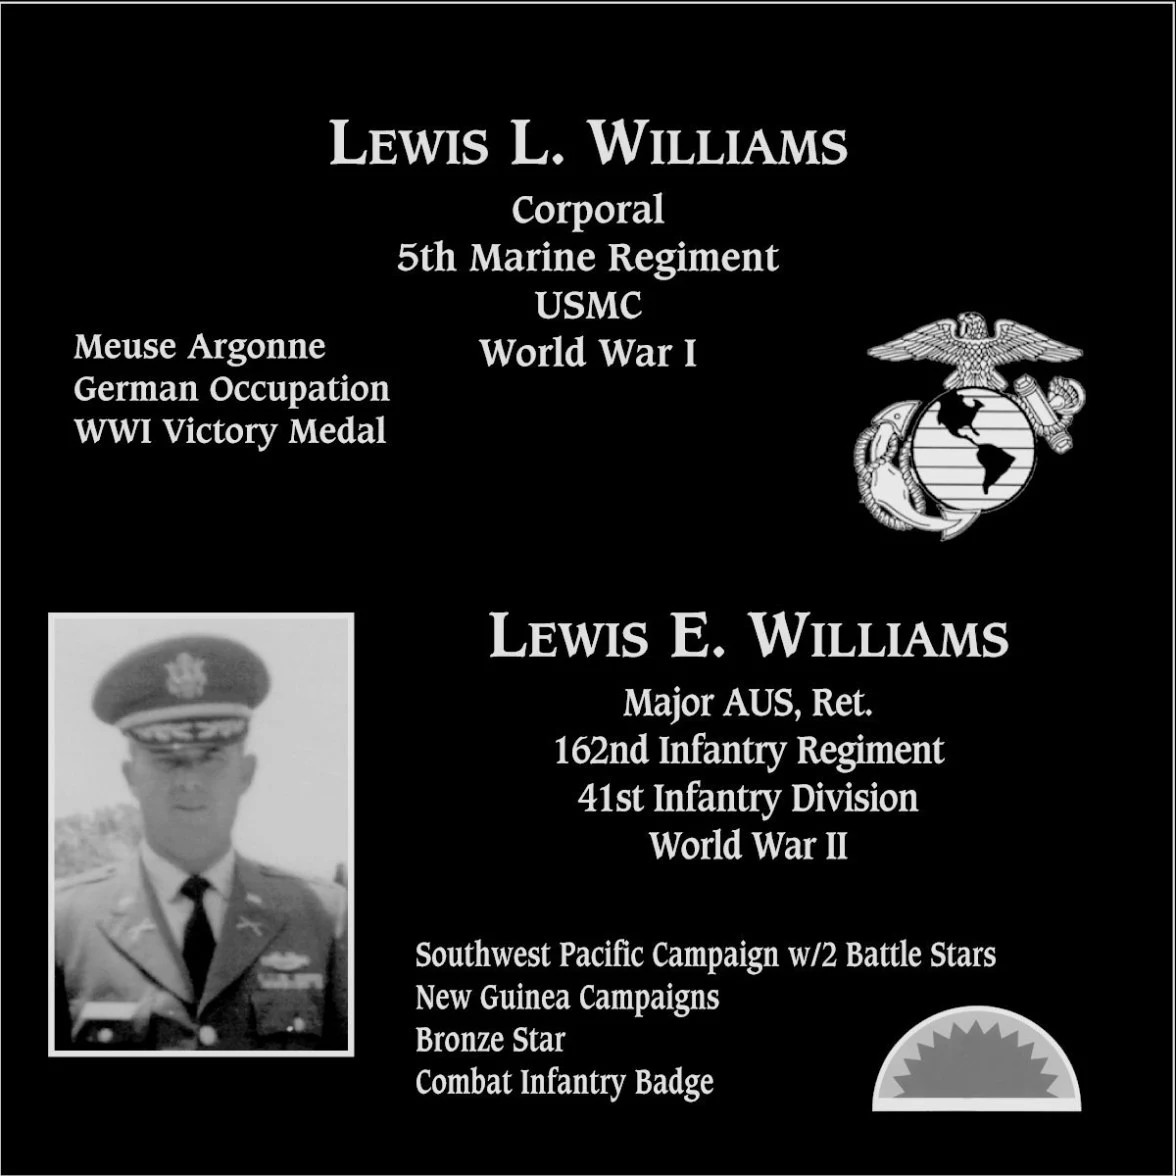 Lewis E. Williams